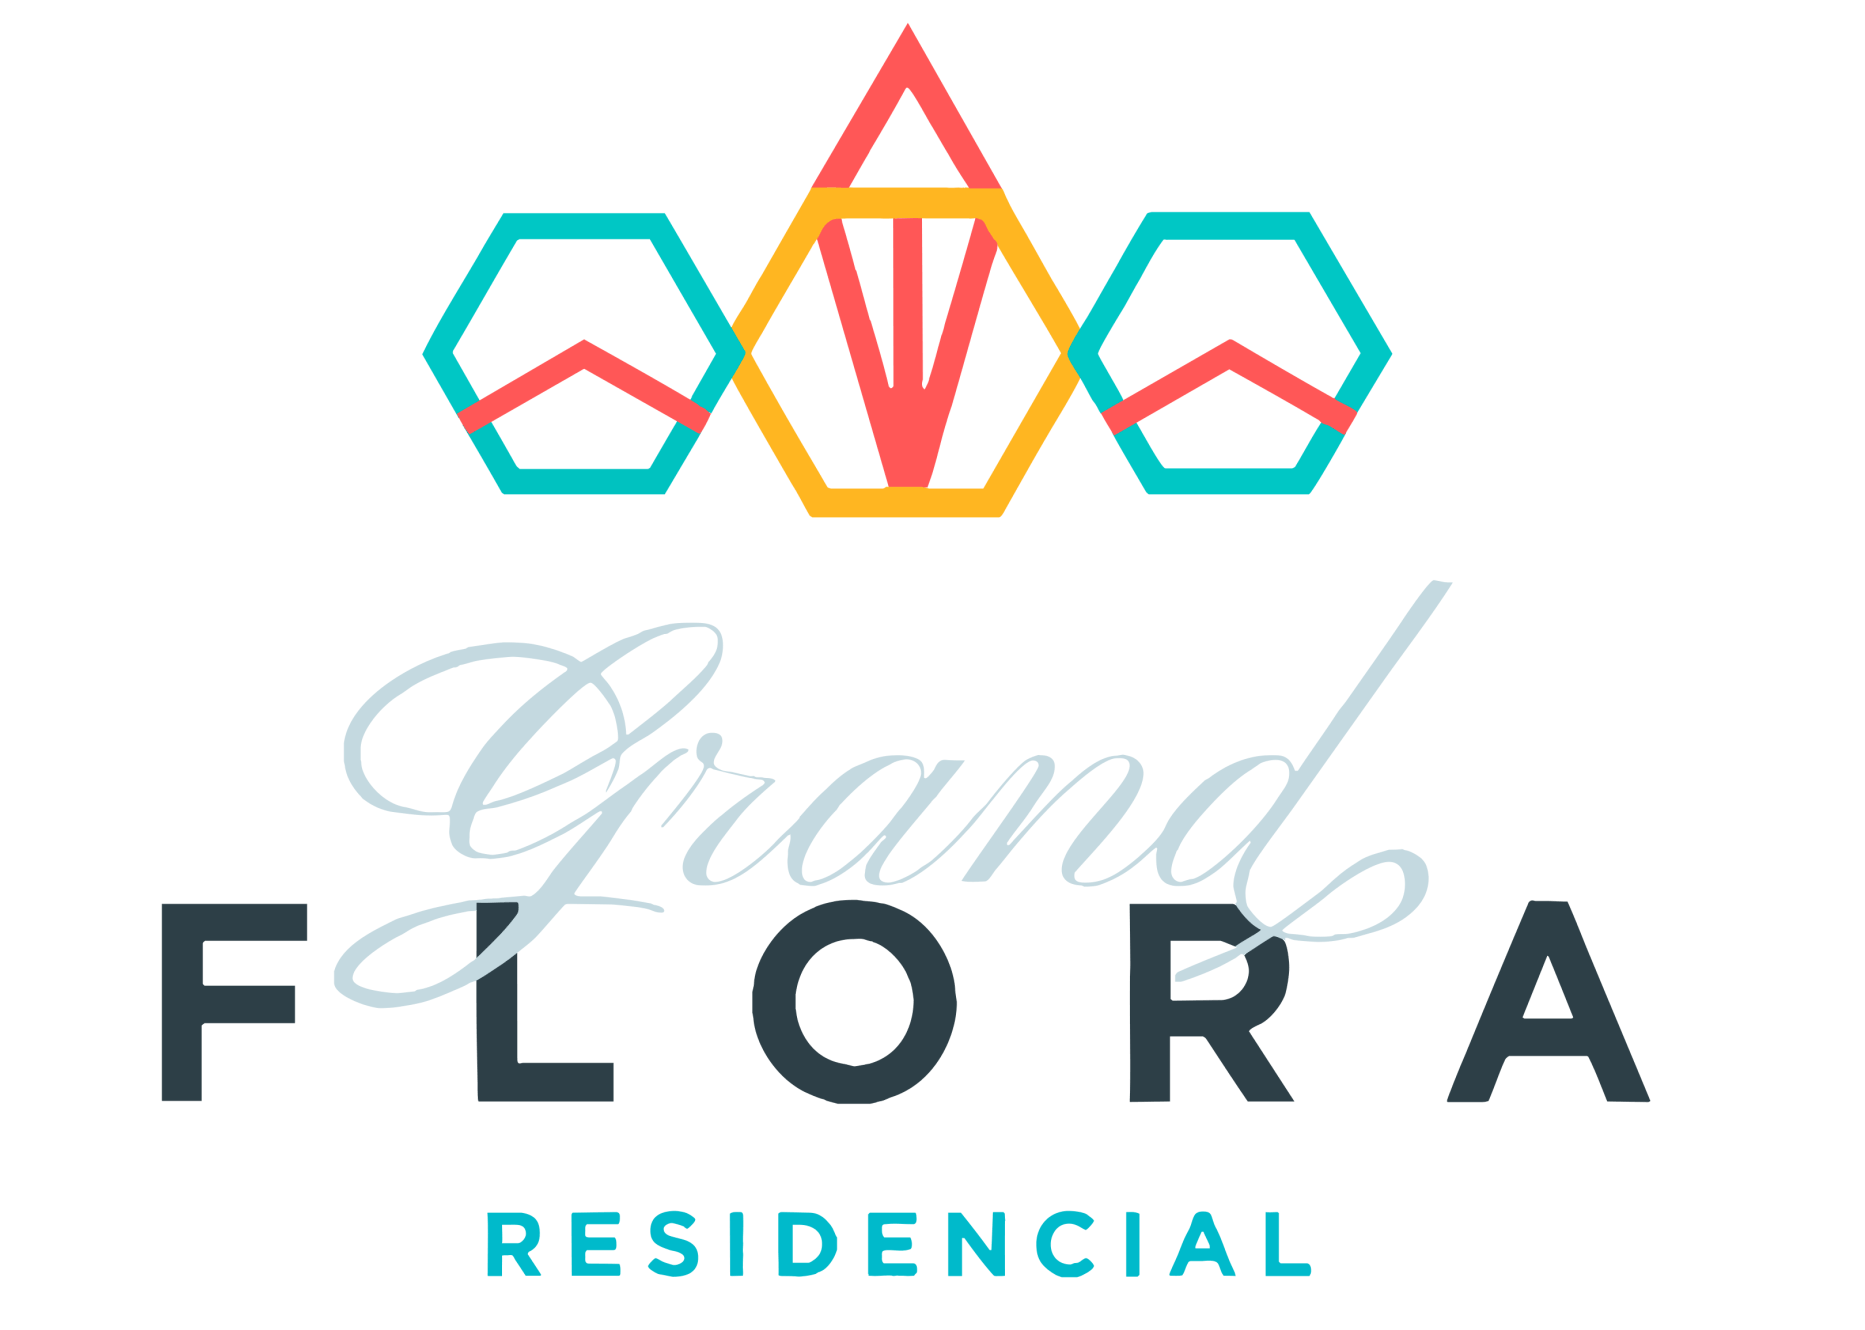 GRAND FLORA RESIDENCIAL